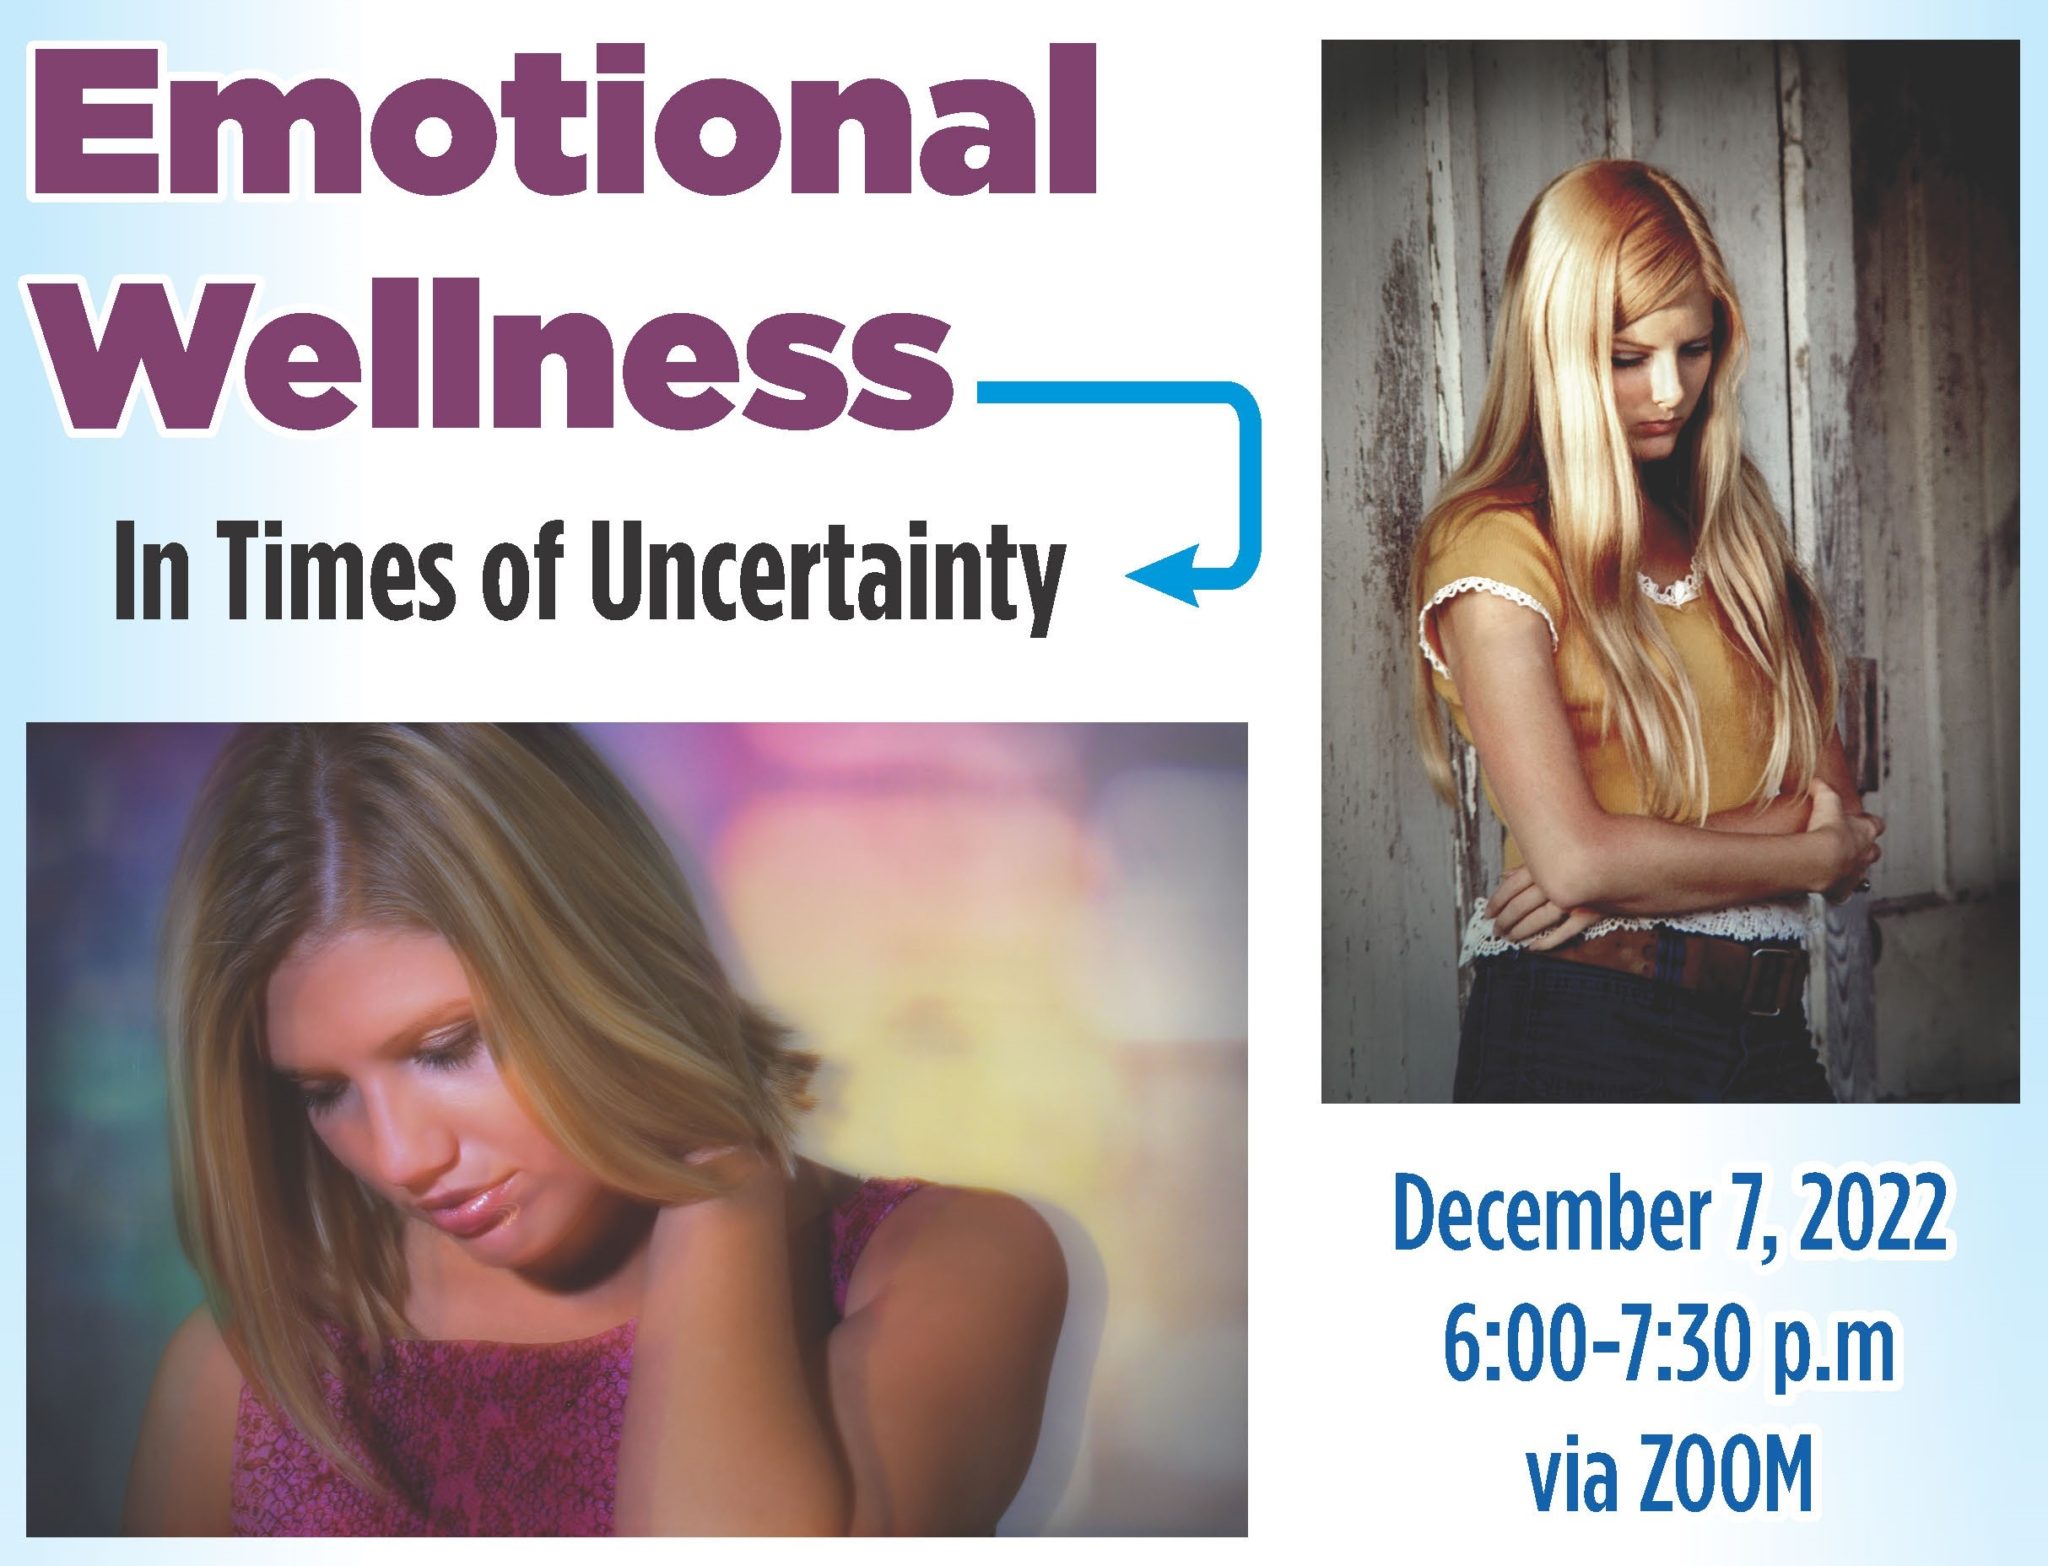 Emotional Wellness Event Flyer Photo